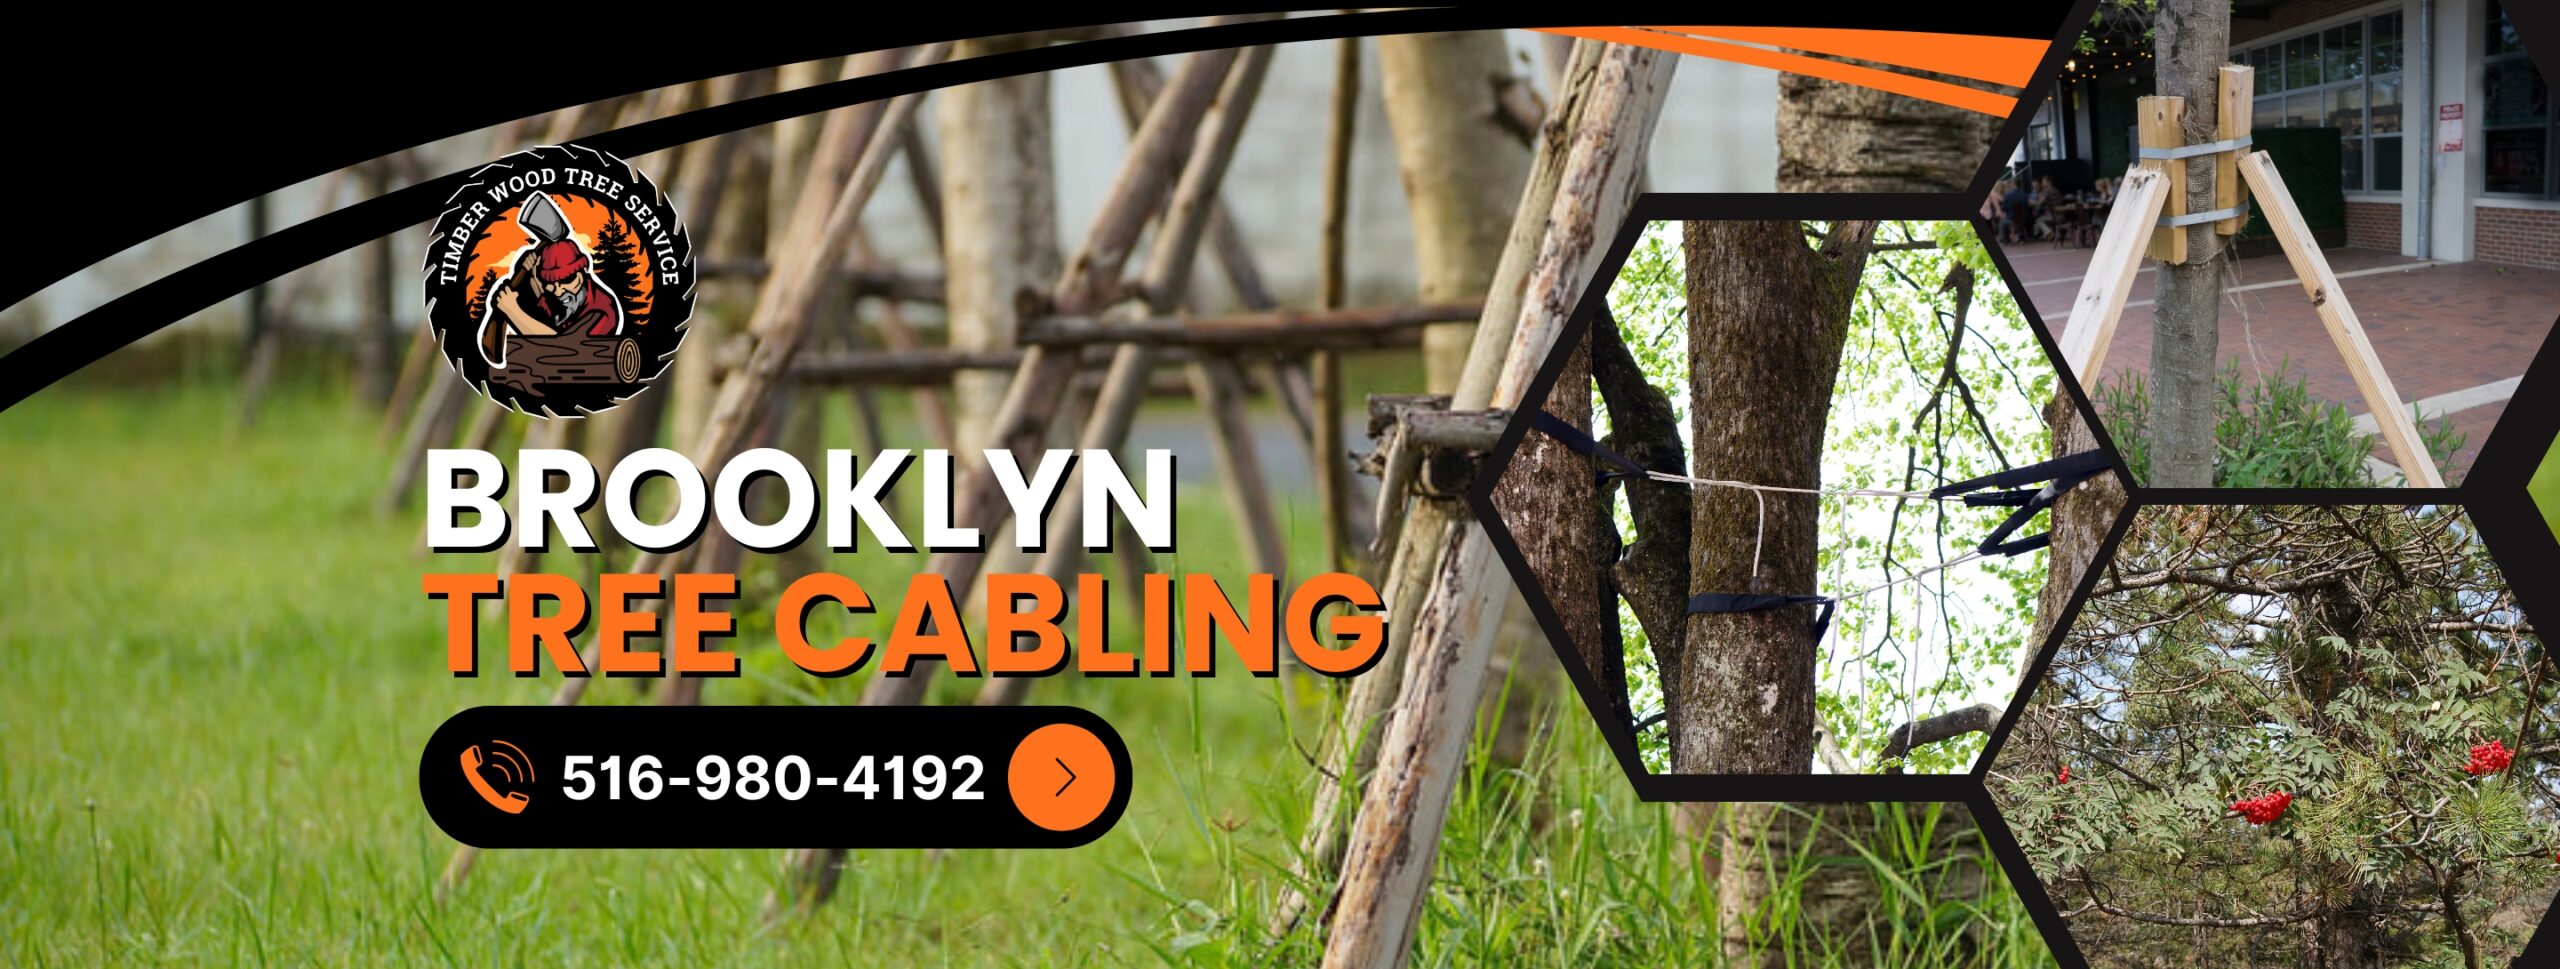 Brooklyn-Tree-Cabling